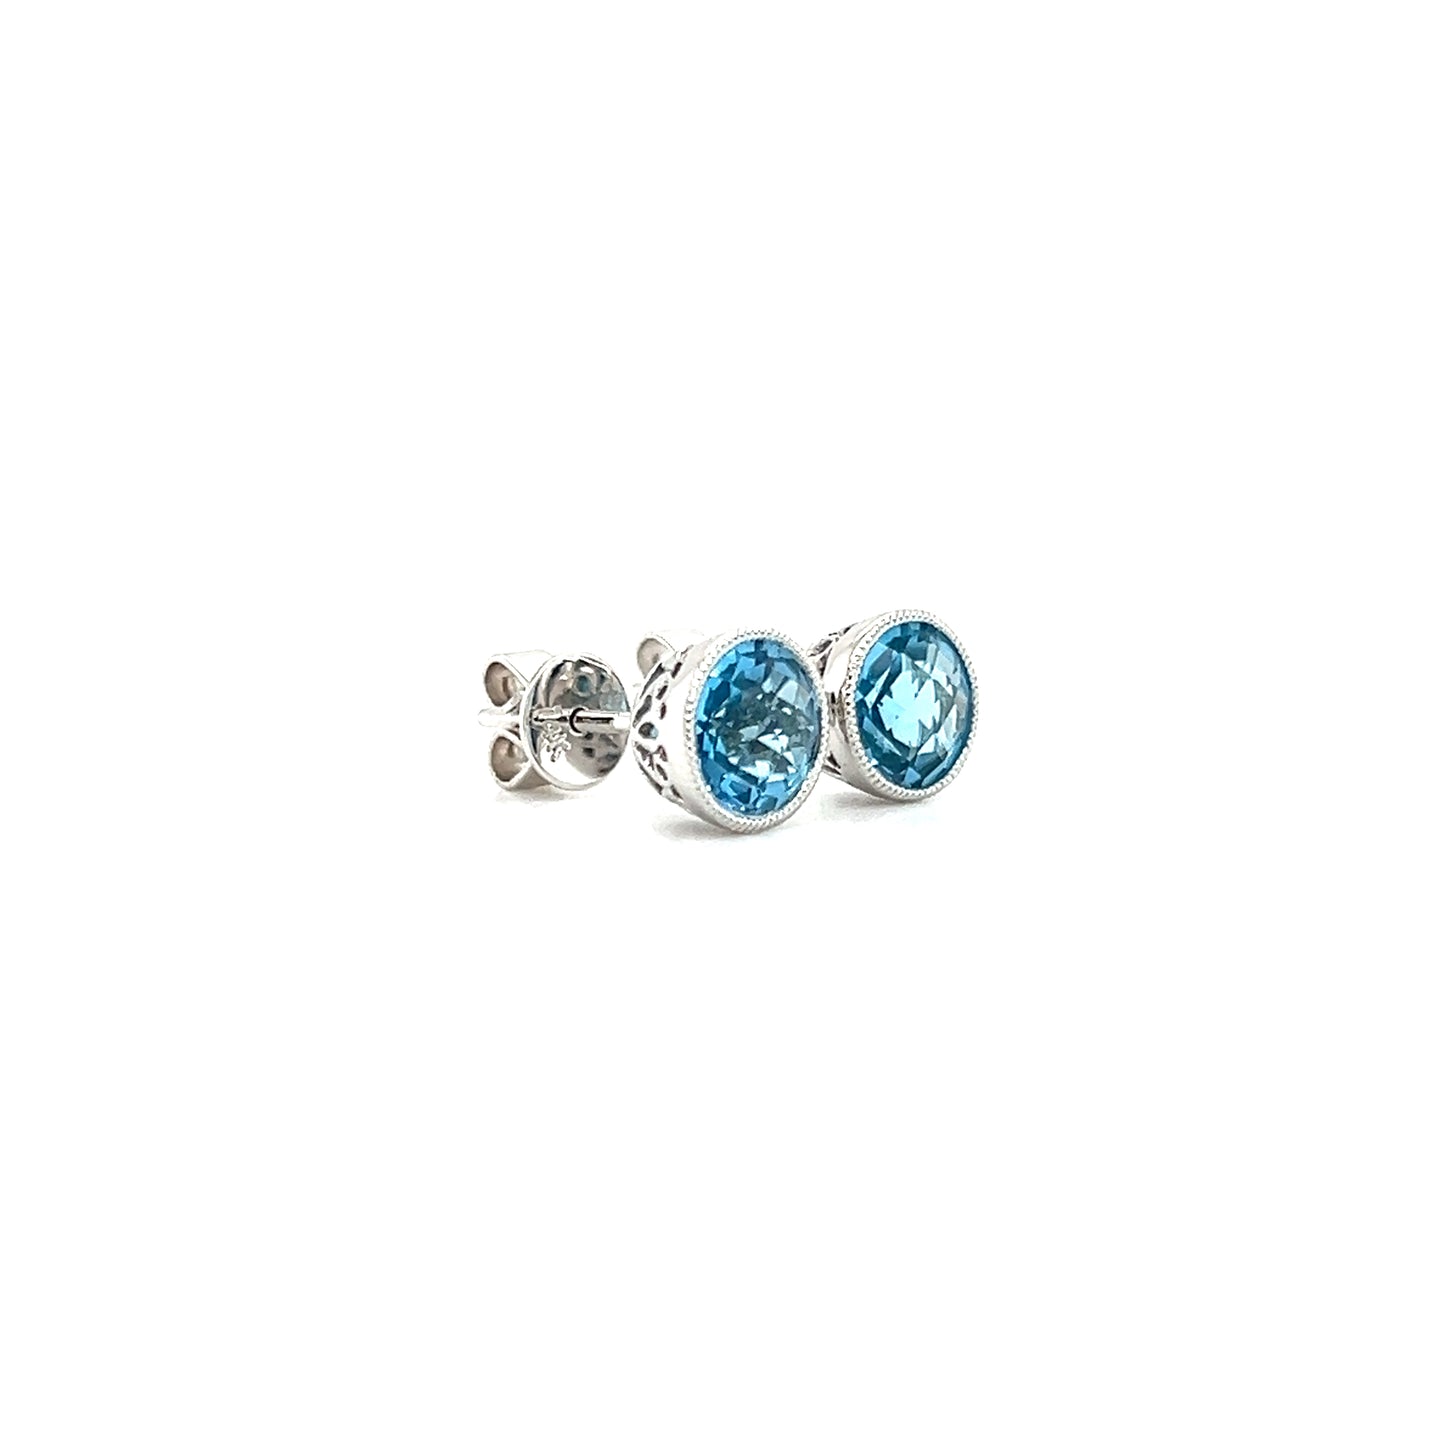 Blue Topaz Stud Earrings with Filigree and Milgrain Details in 14K White Gold Left Side View